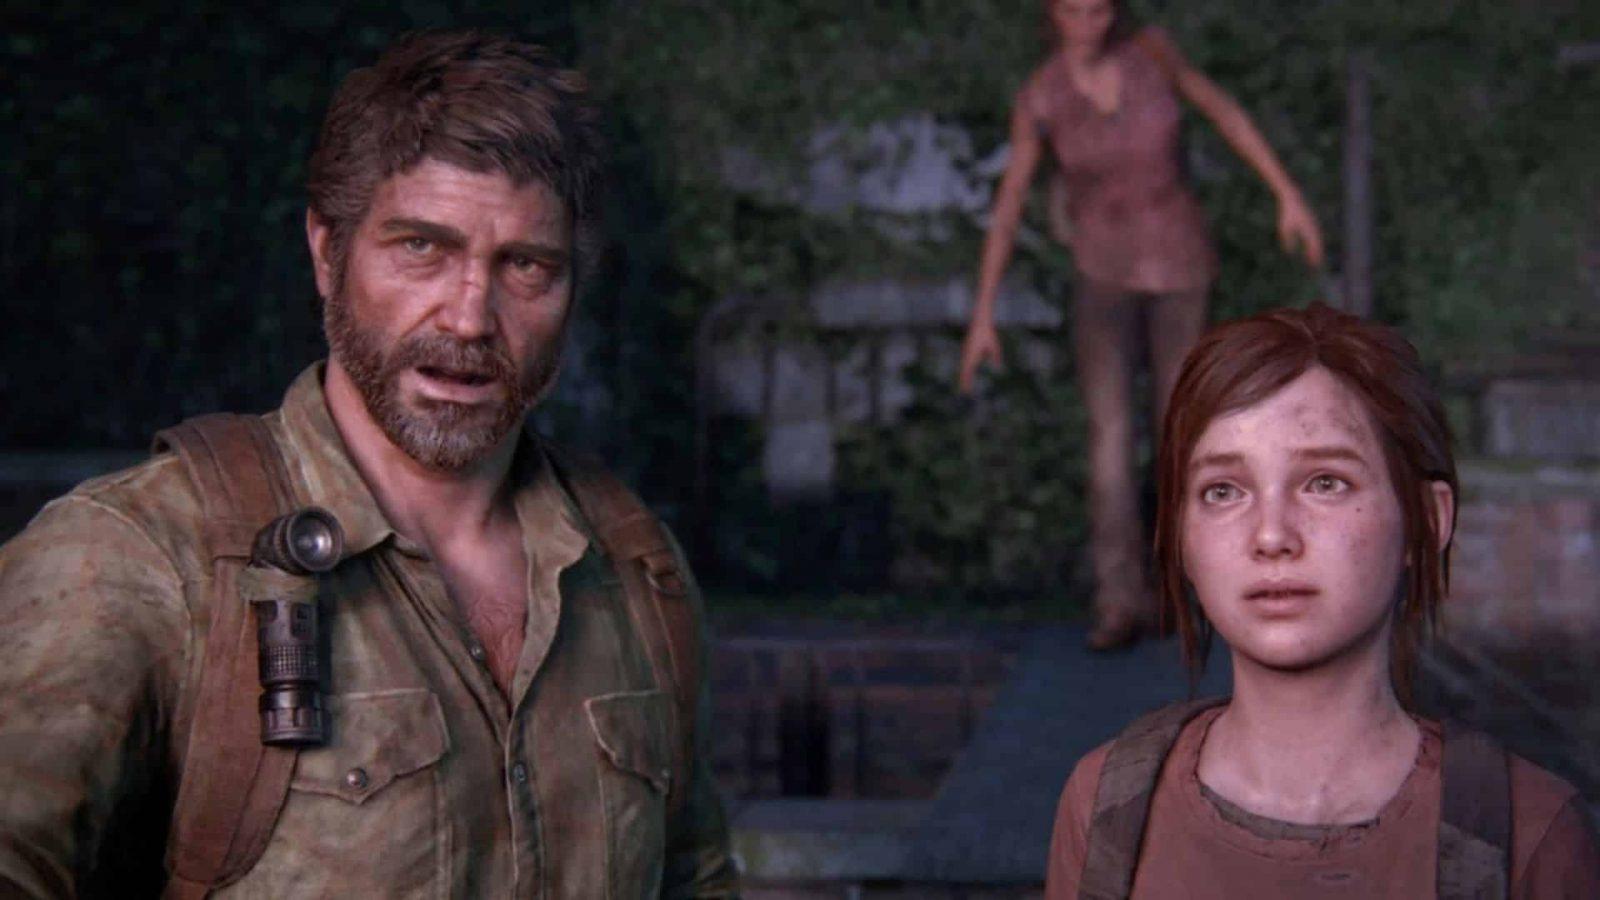 Remake VS Remaster - The Last of Us Graphics Comparison 